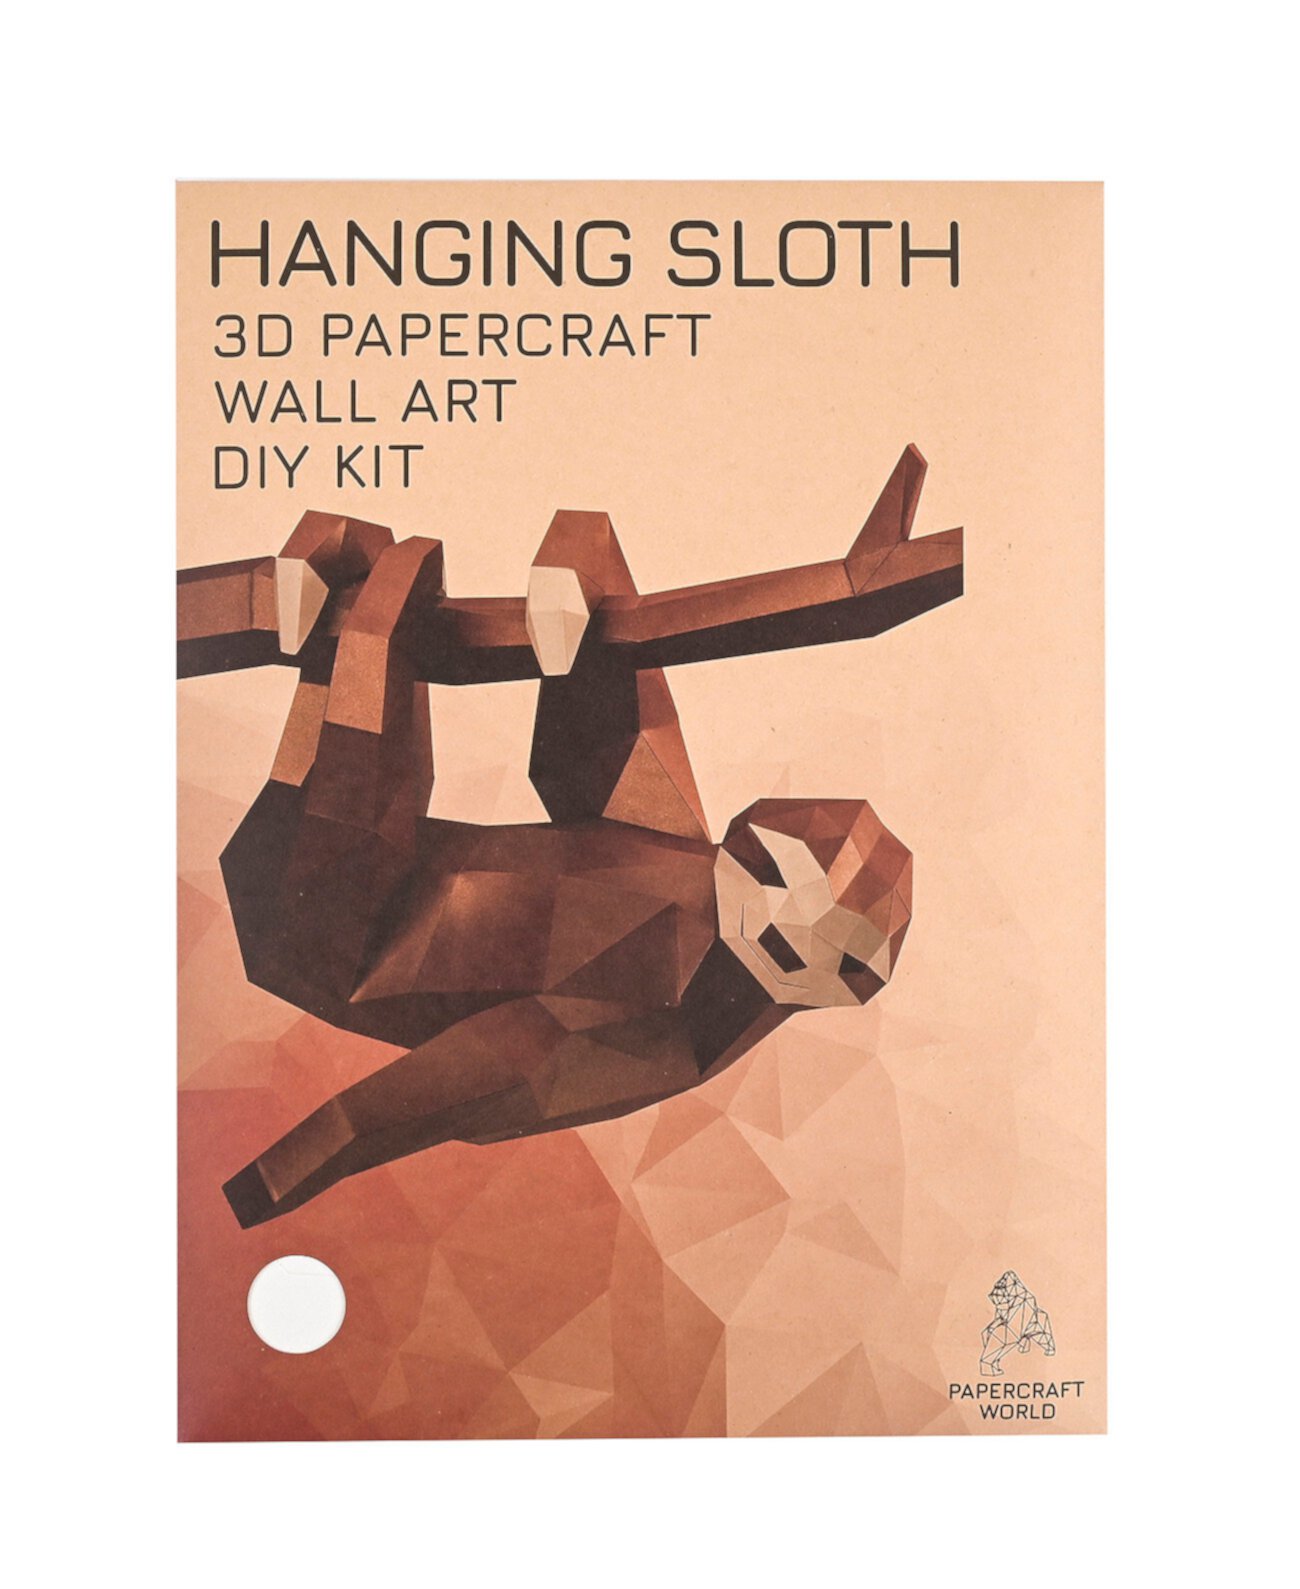 3D Papercraft Wall Art DIY Kit, Hanging Sloth Kit PaperCraft World